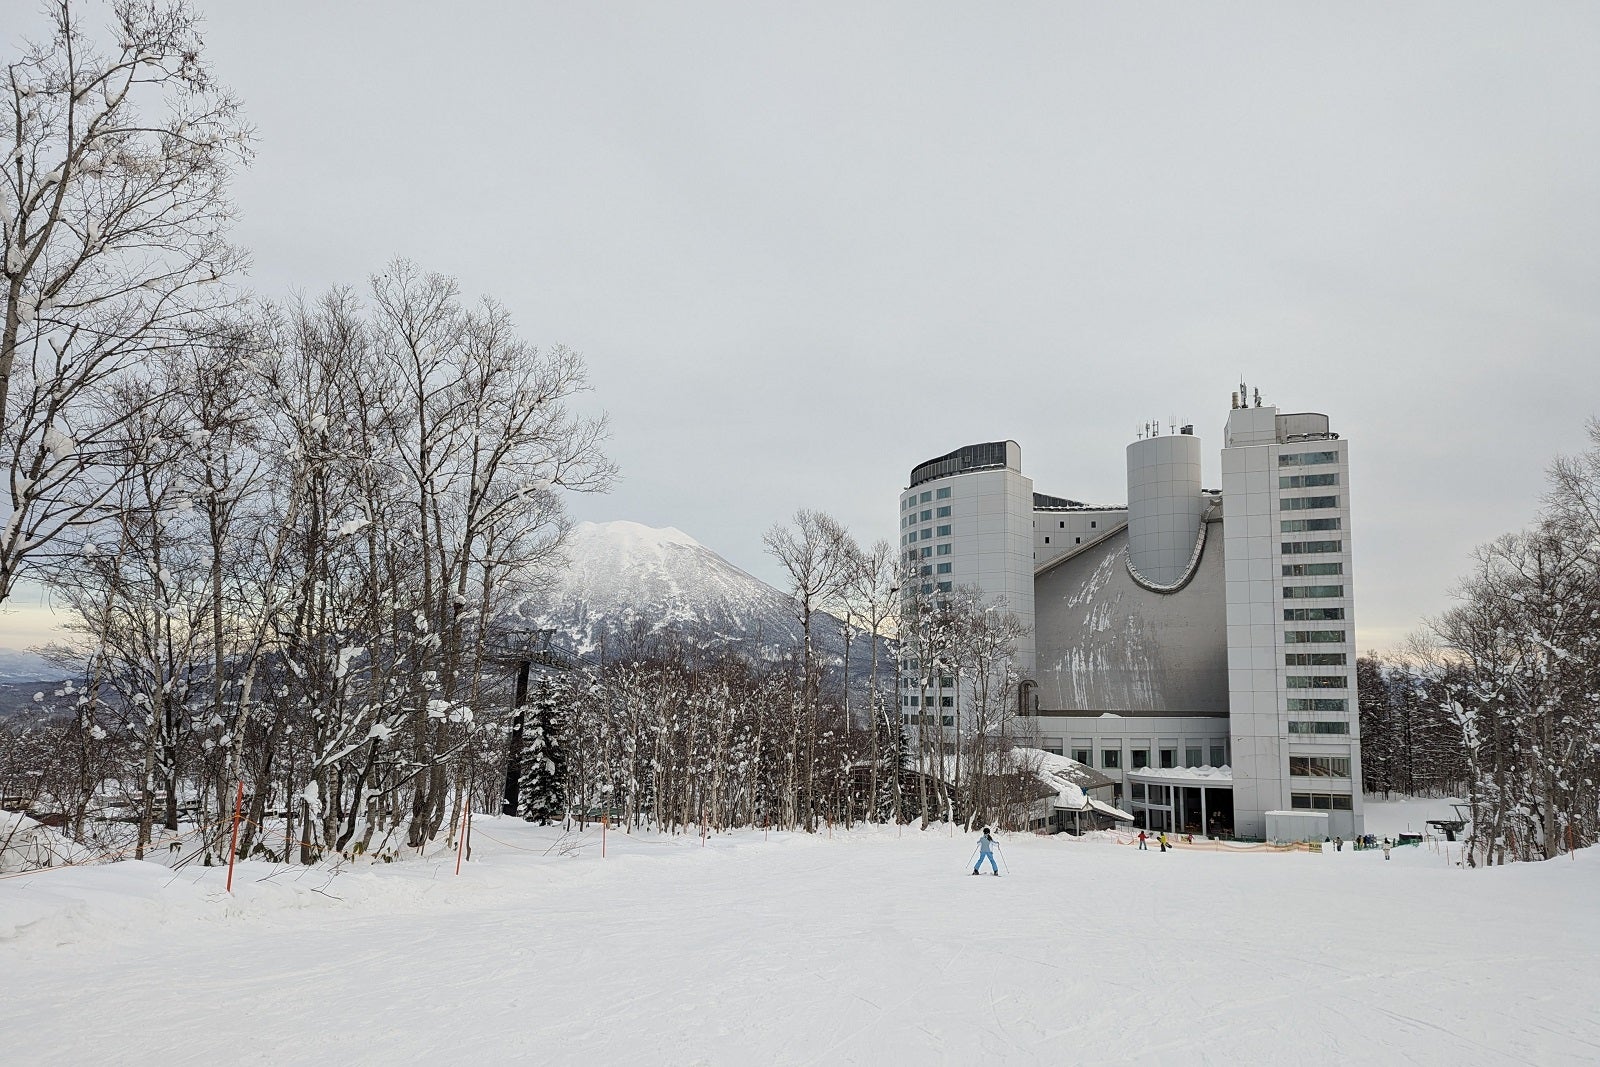 Skiing at Hilton Niseko Village in Japan